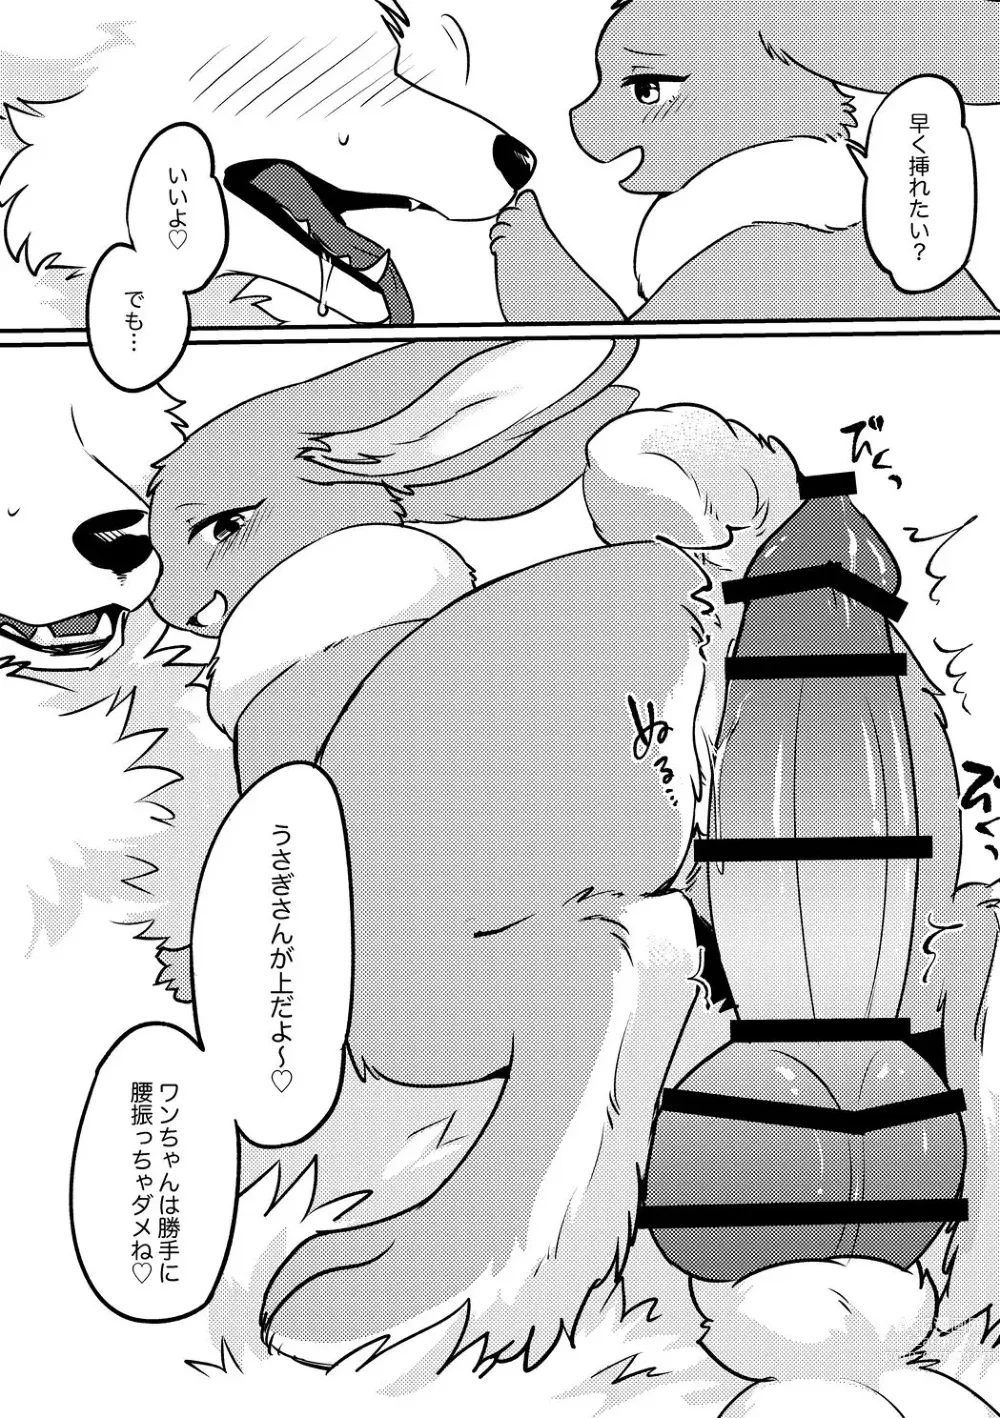 Page 5 of doujinshi Shinshun Happy Rabbit!